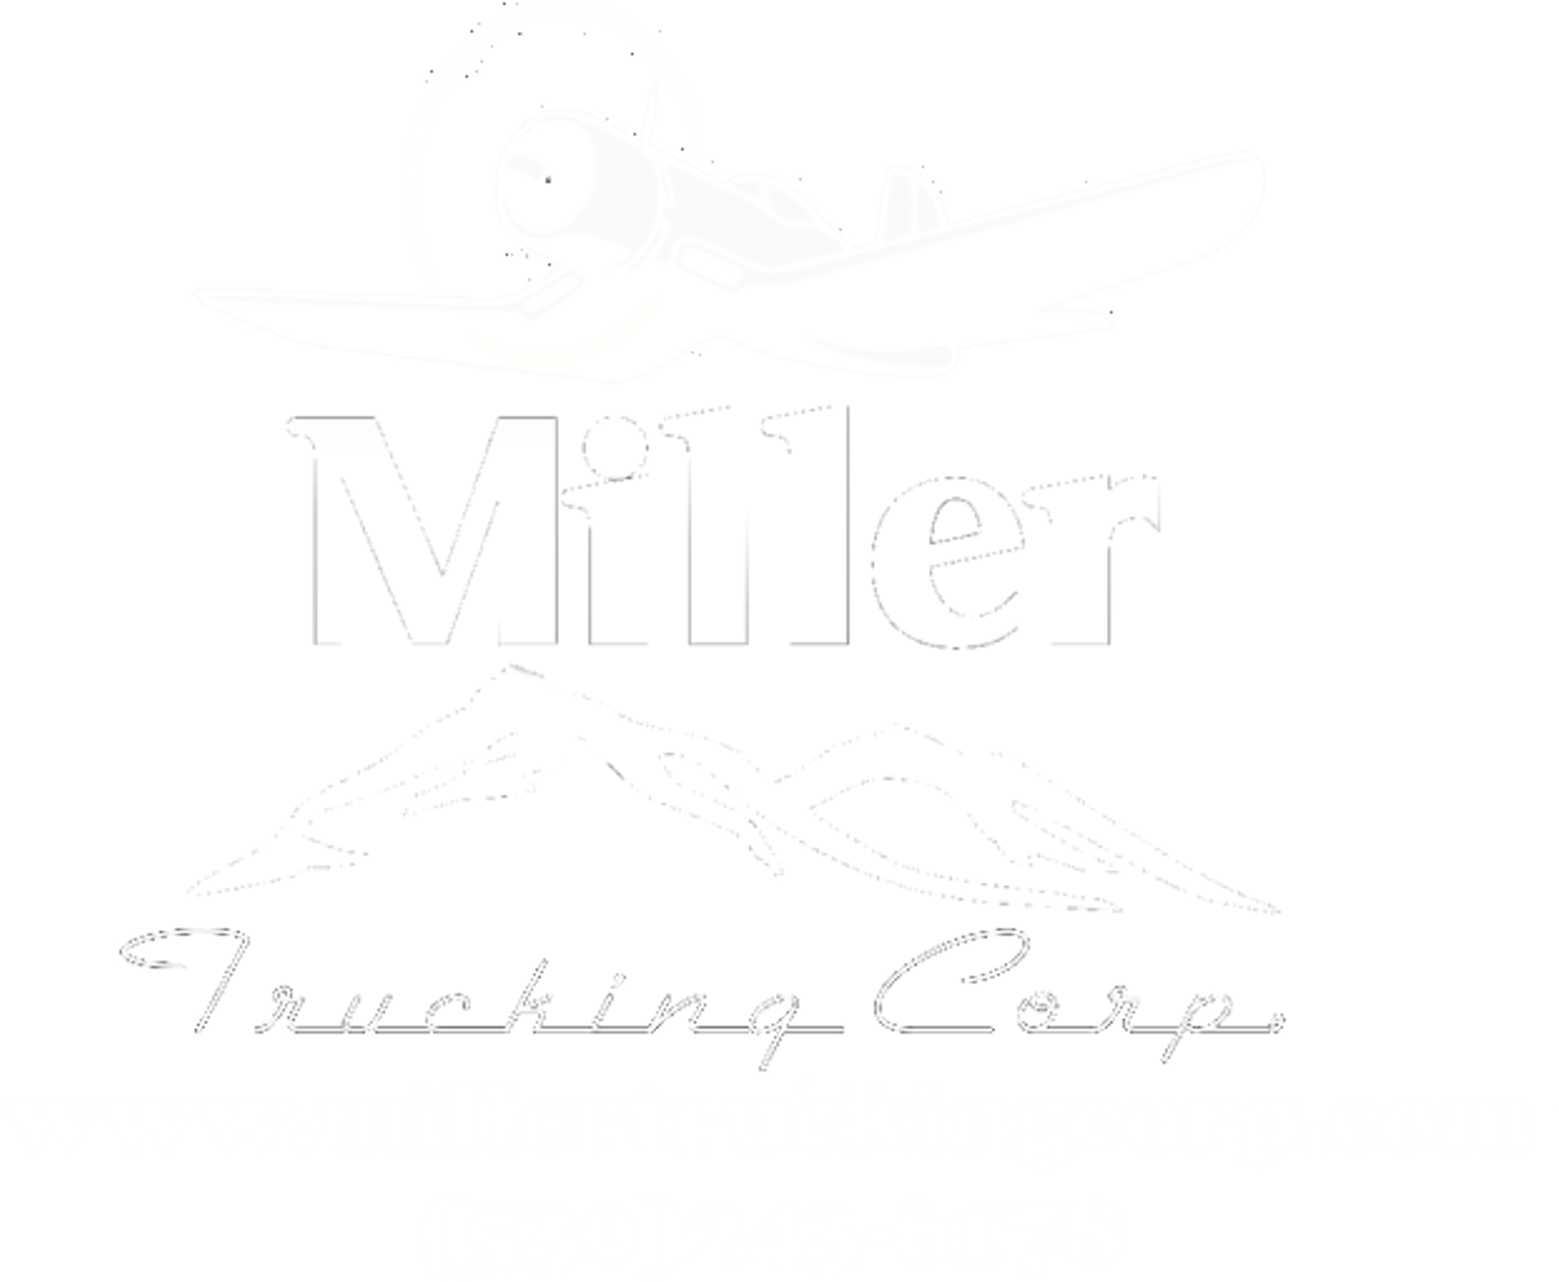 Miller Trucking Corpoation